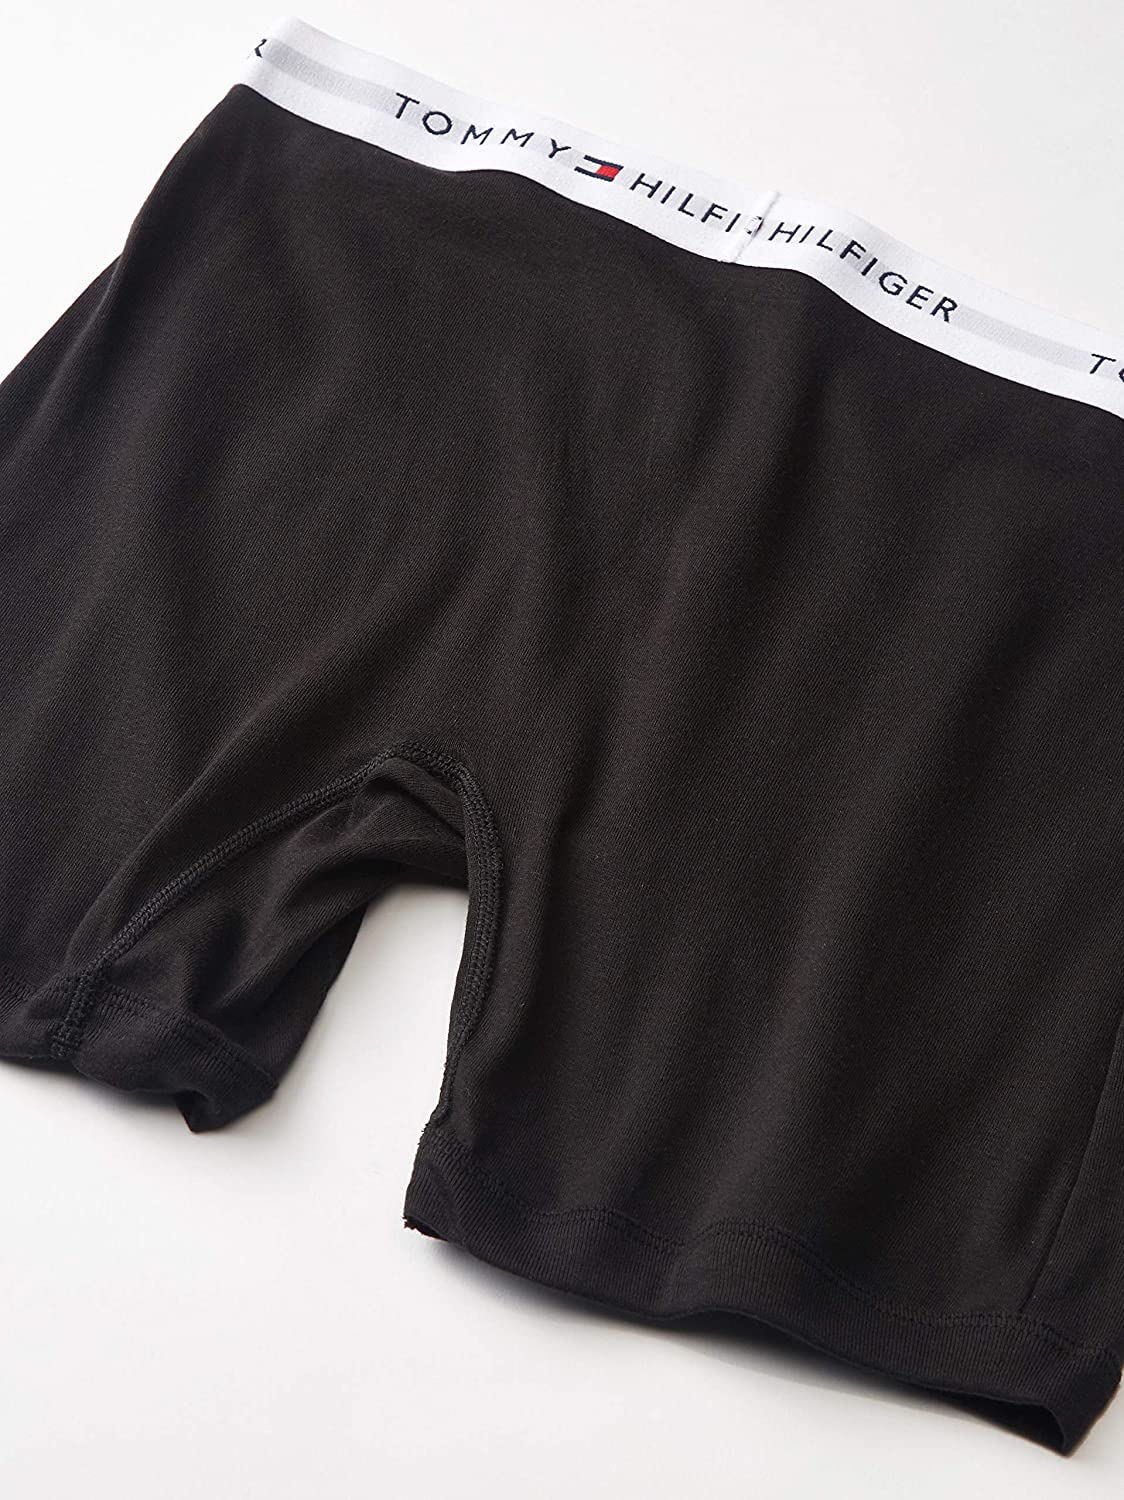 Men's Underwear Cotton Classics Megapack Boxer Brief-Amazon Exclusive